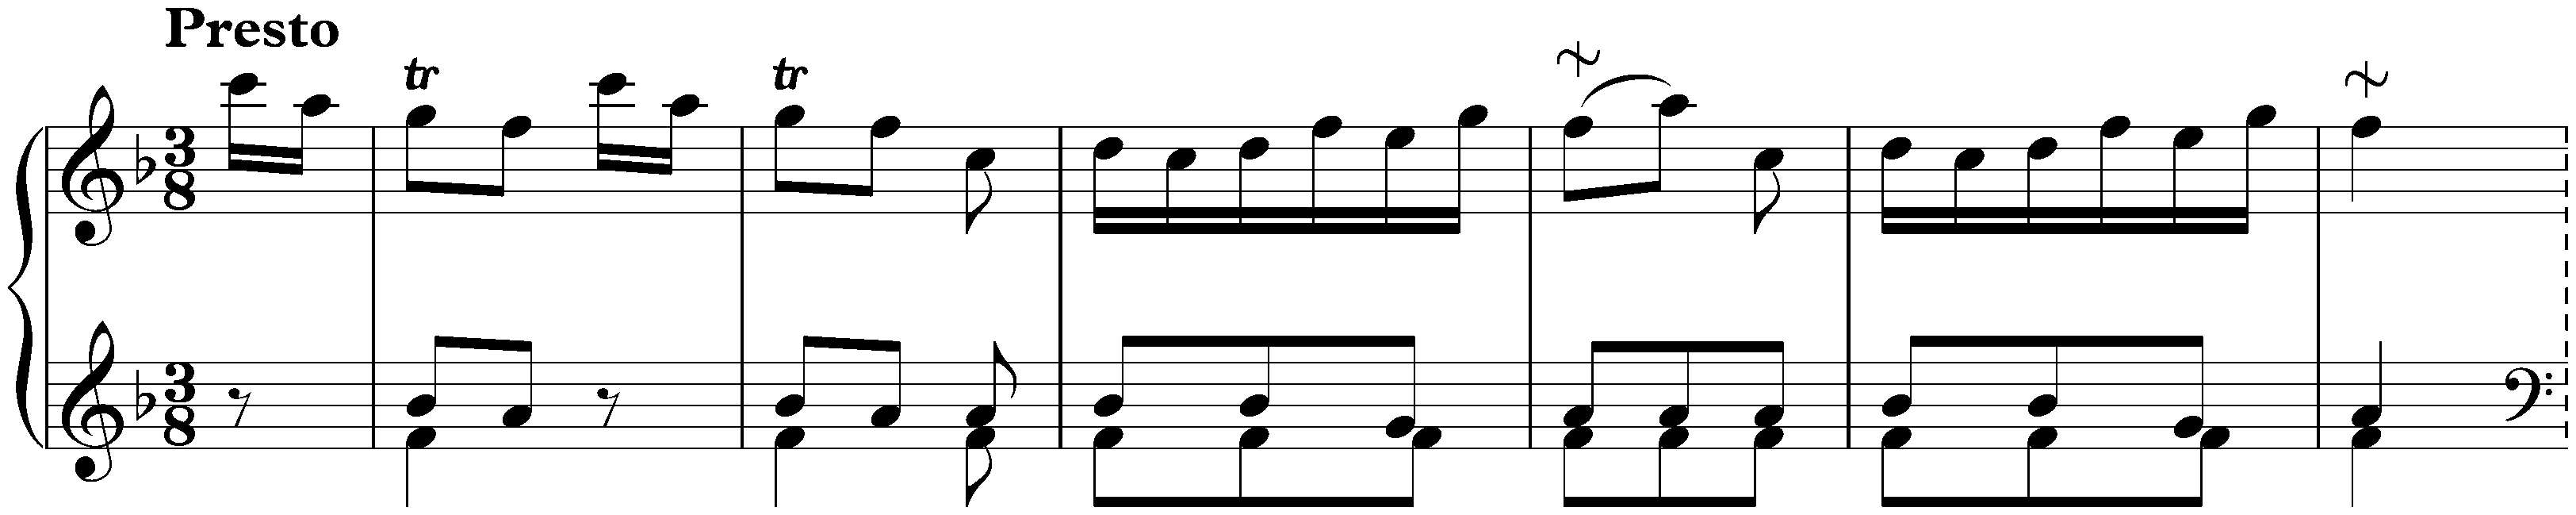 Sonata in F major, Hob. XVI:F3; 3. Finale: Presto